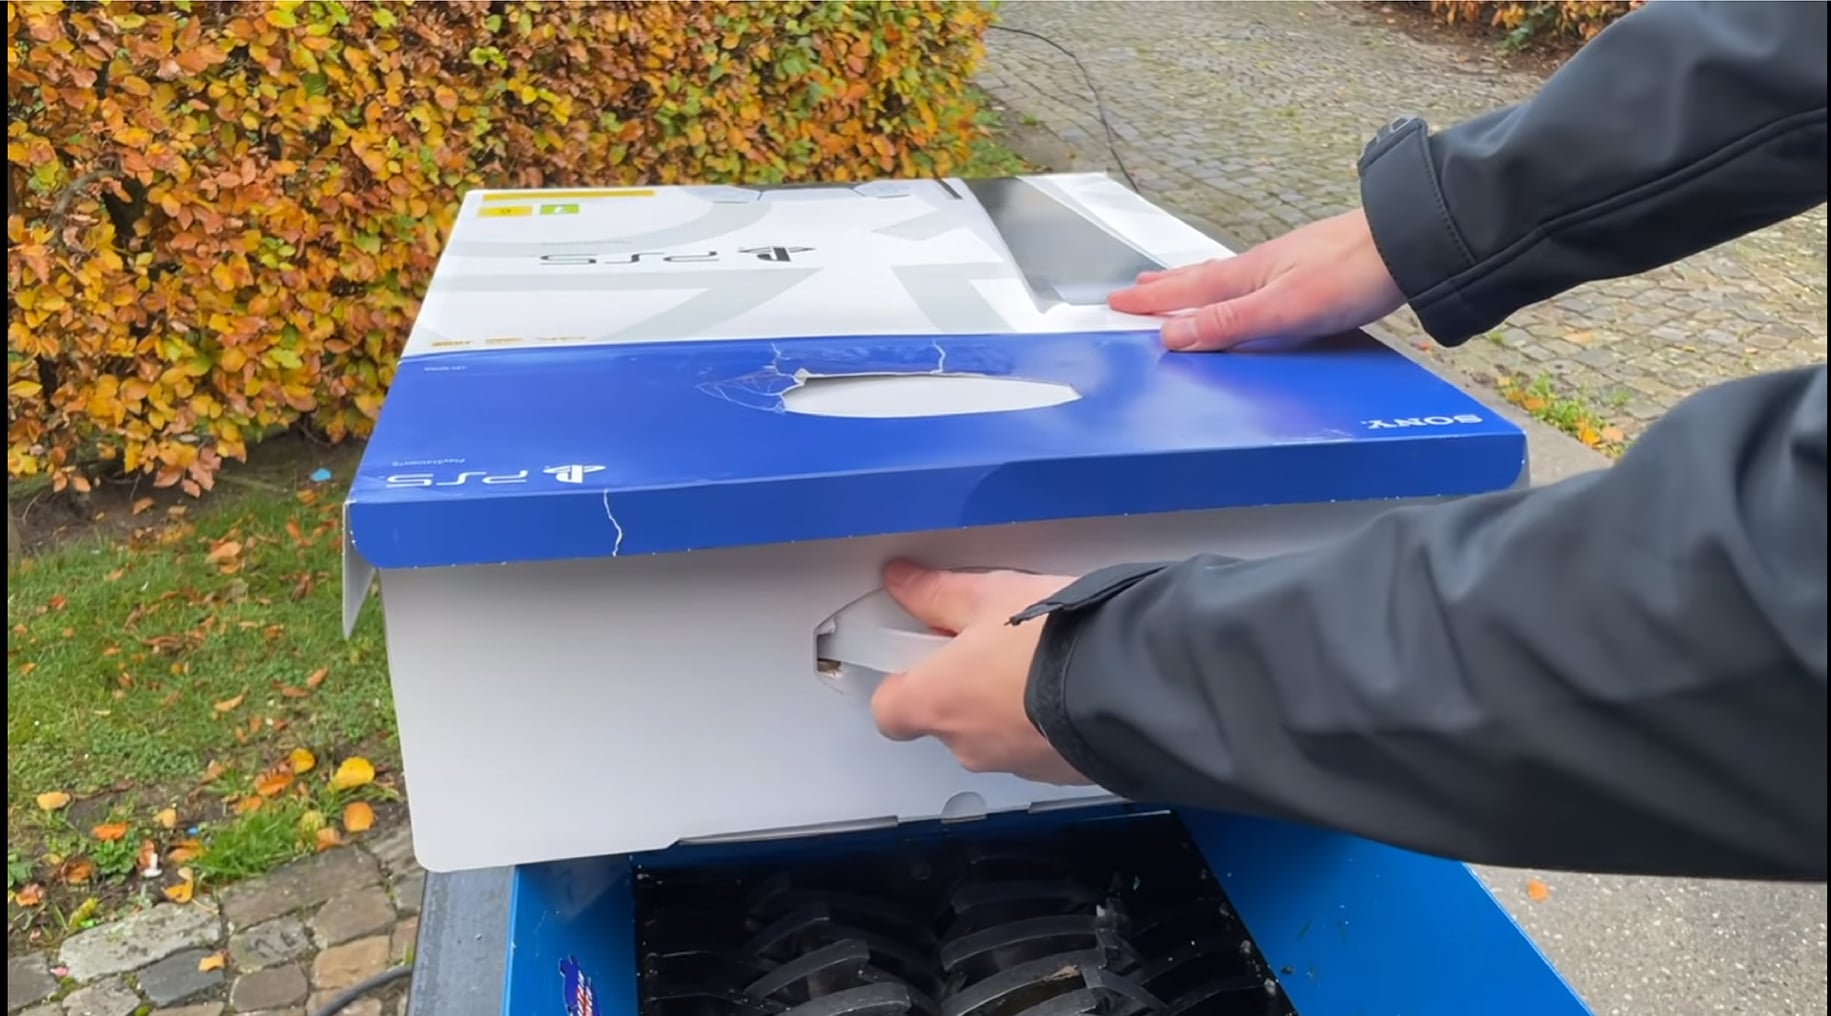 Un propietario de PS5 lanza la consola a trituradora como parte de "experimento"